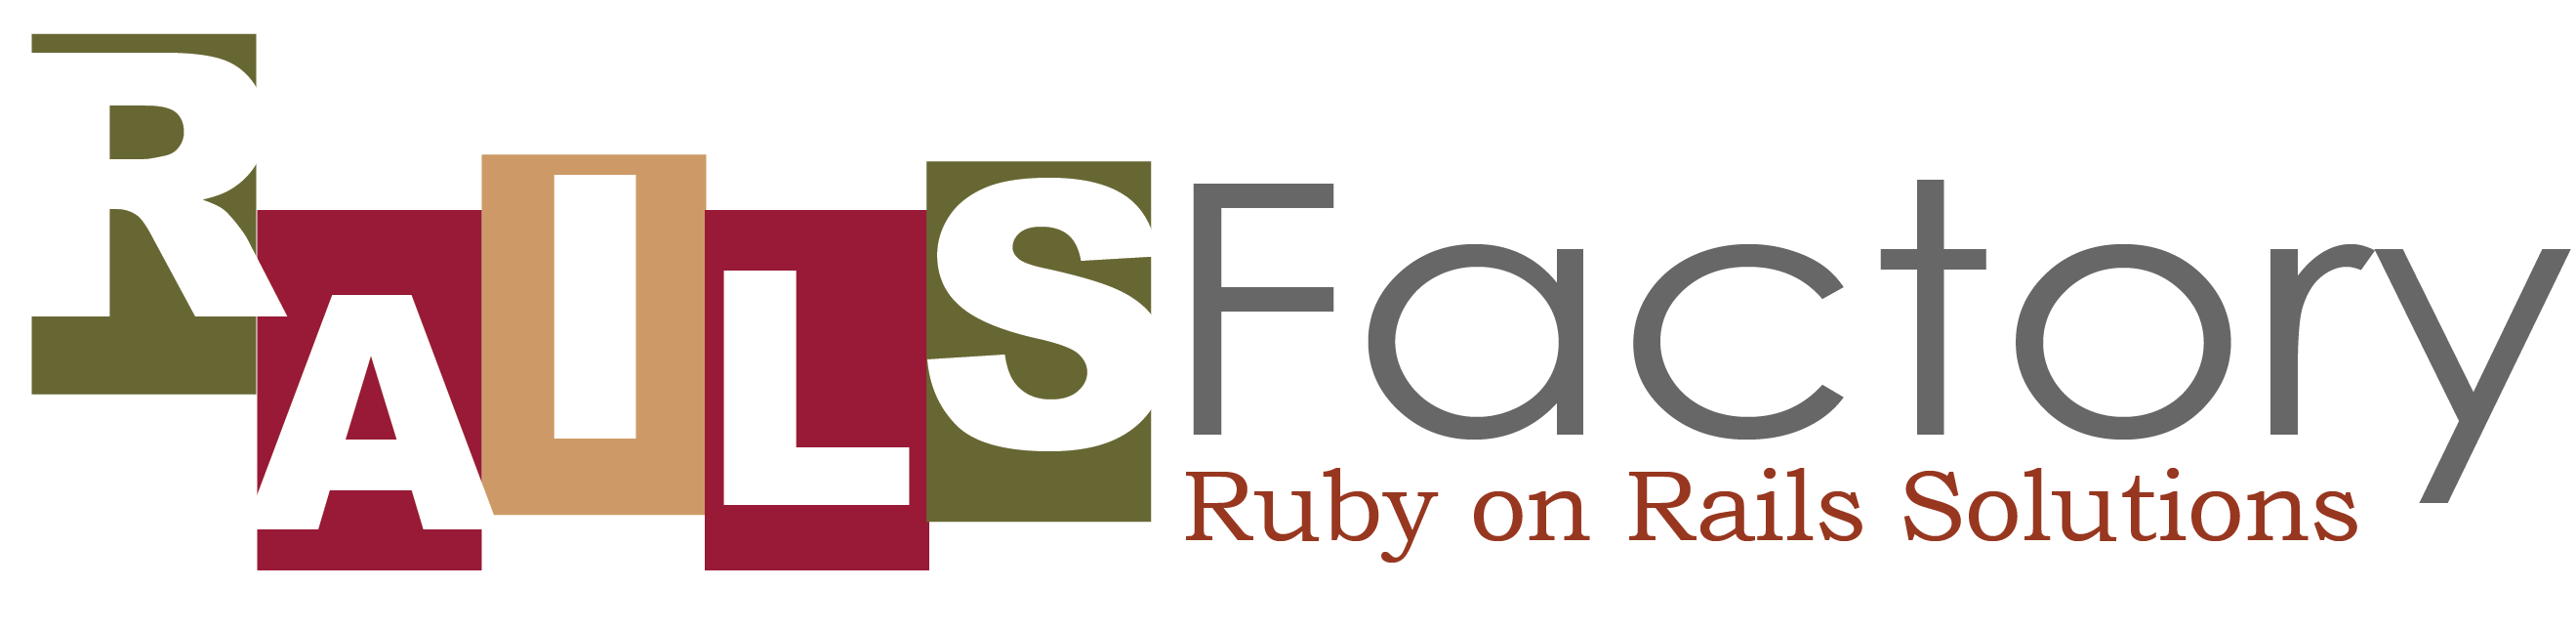 railsfactory logo